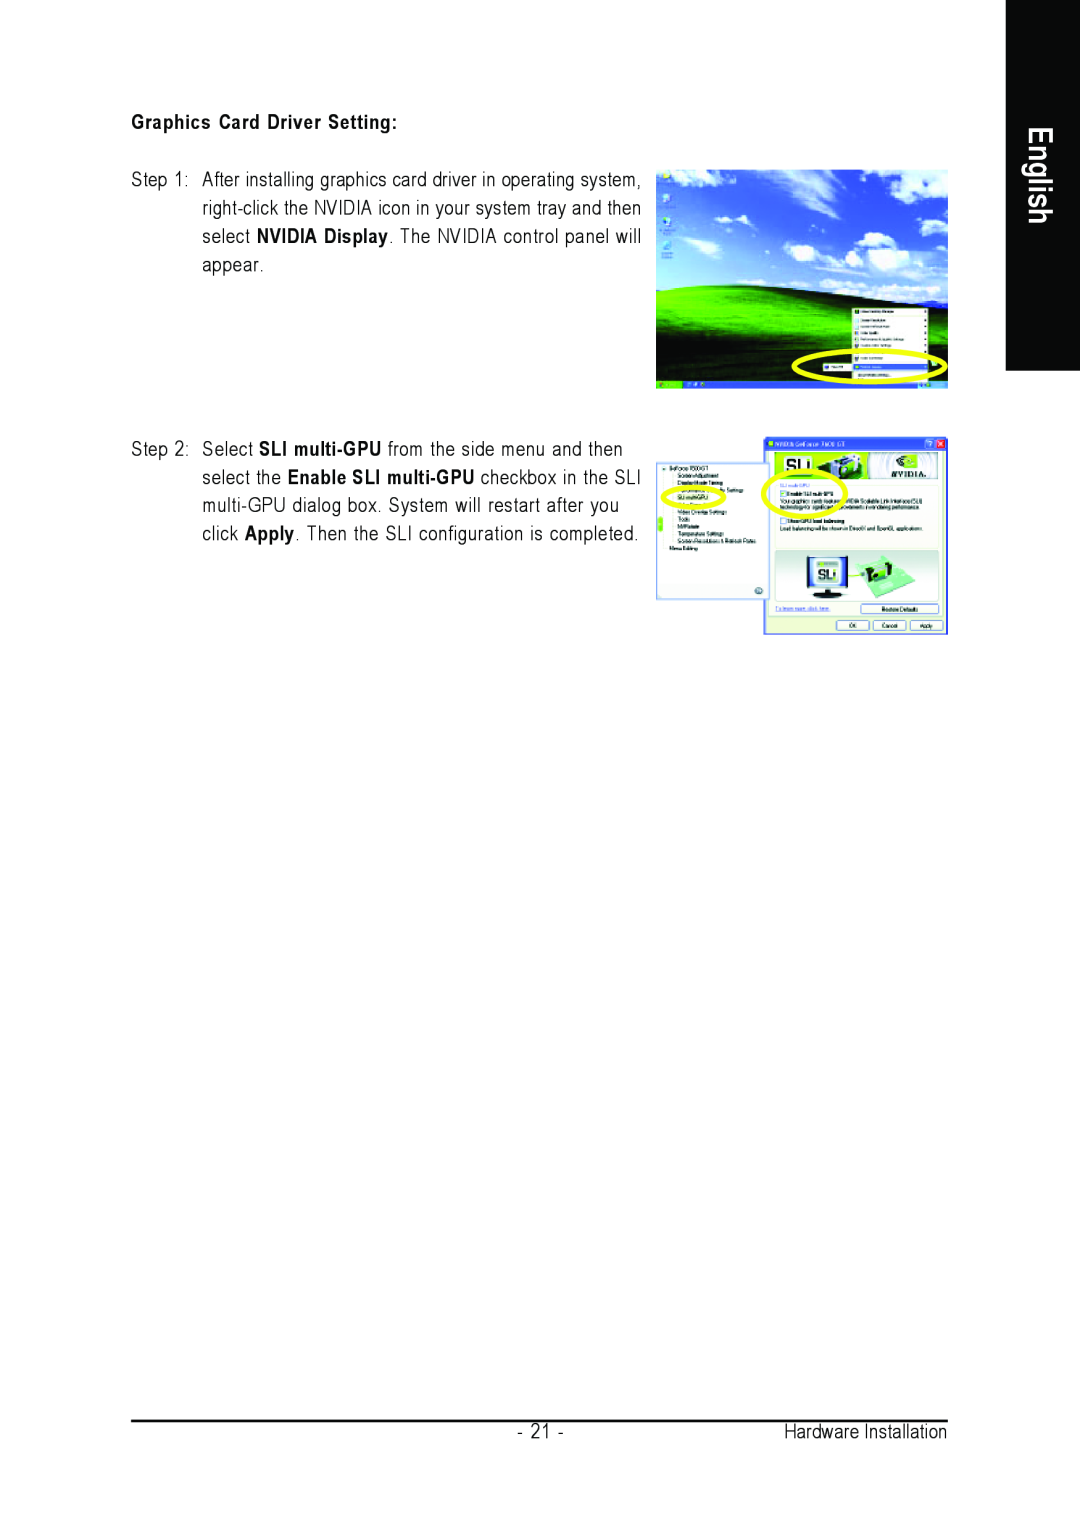 Intel GA-N680SLI-DQ6 user manual English, Graphics Card Driver Setting 